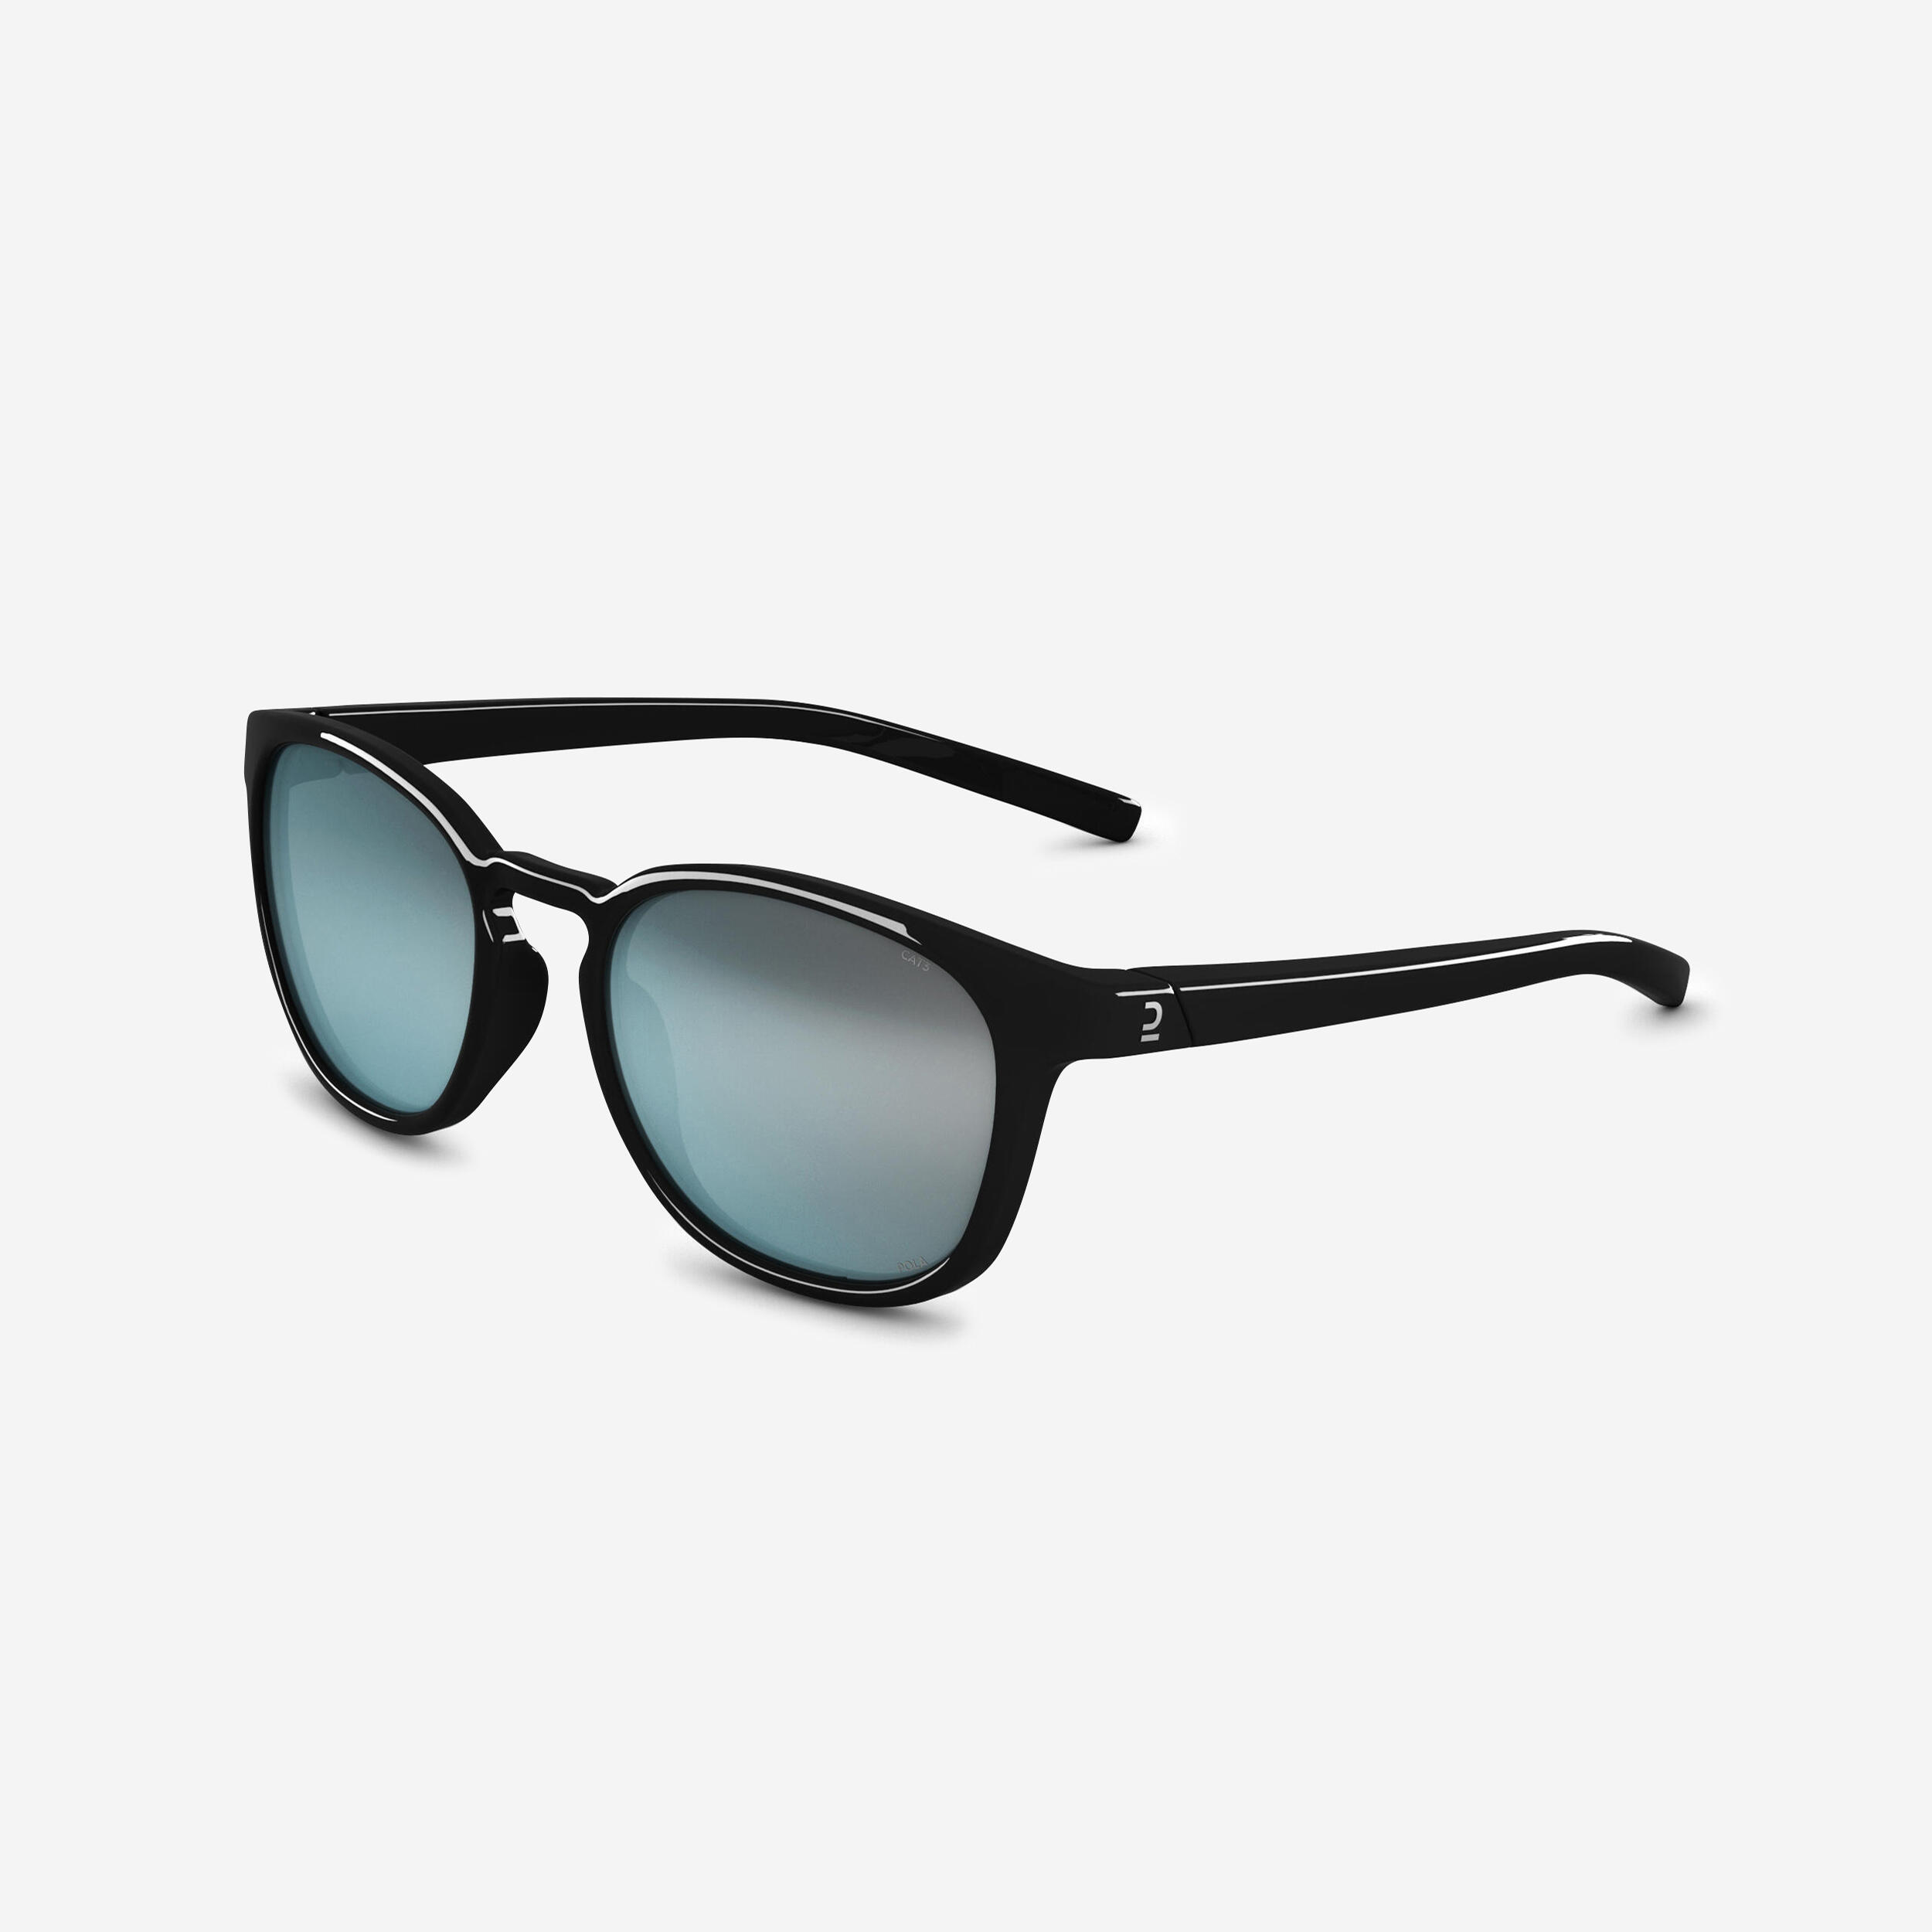 Polarized Hiking Sunglasses - MH 570 Black/Silver